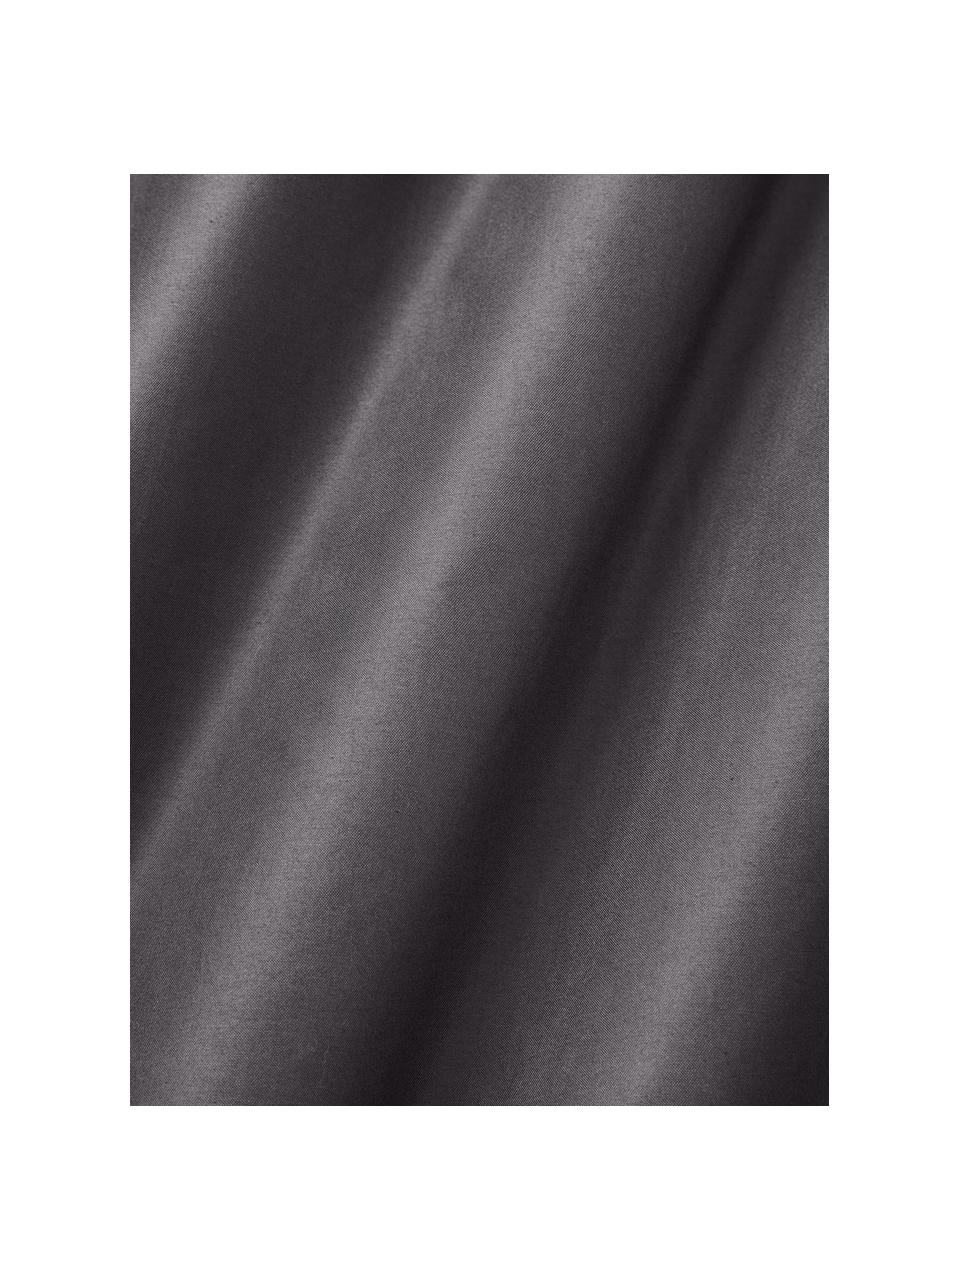 Sábana bajera de satén Premium, Gris oscuro, Cama 90 cm (90 x 200 x 25 cm)